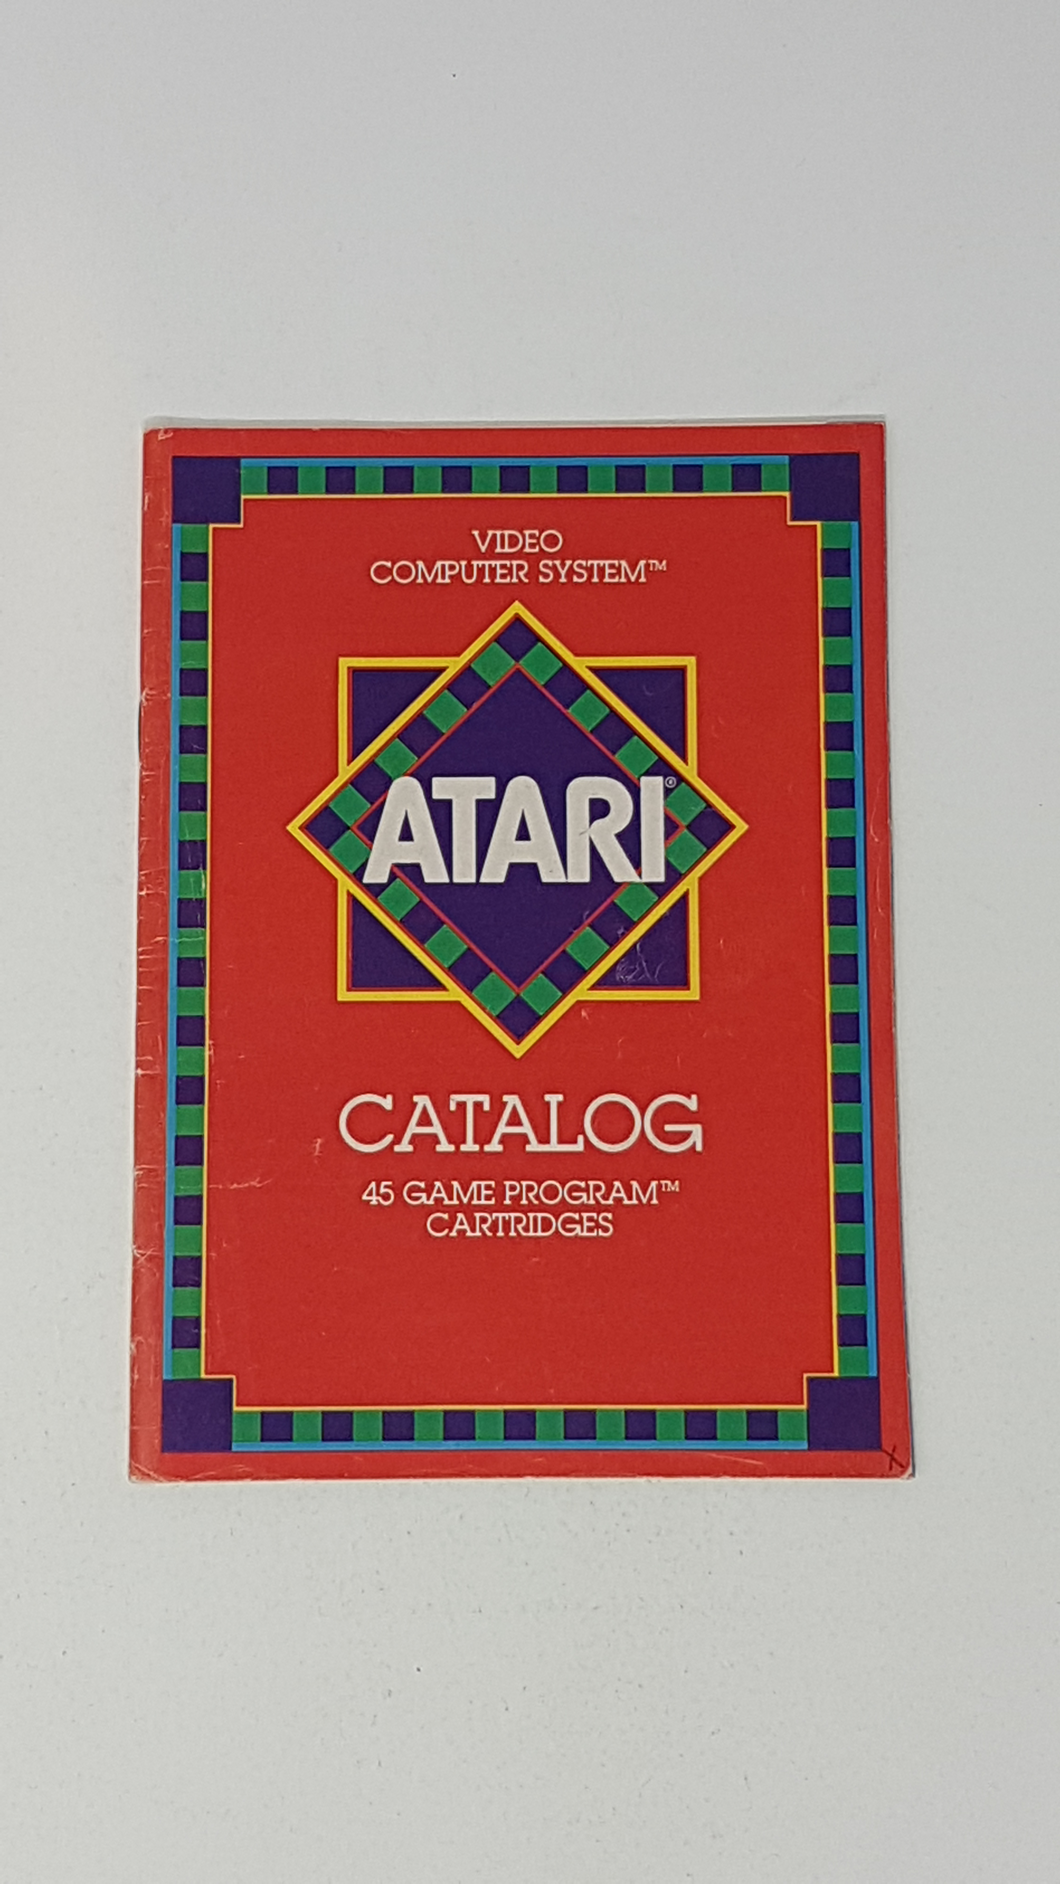 Atari 2600 Catalog Video Computer System 45 Game Program Cartridges